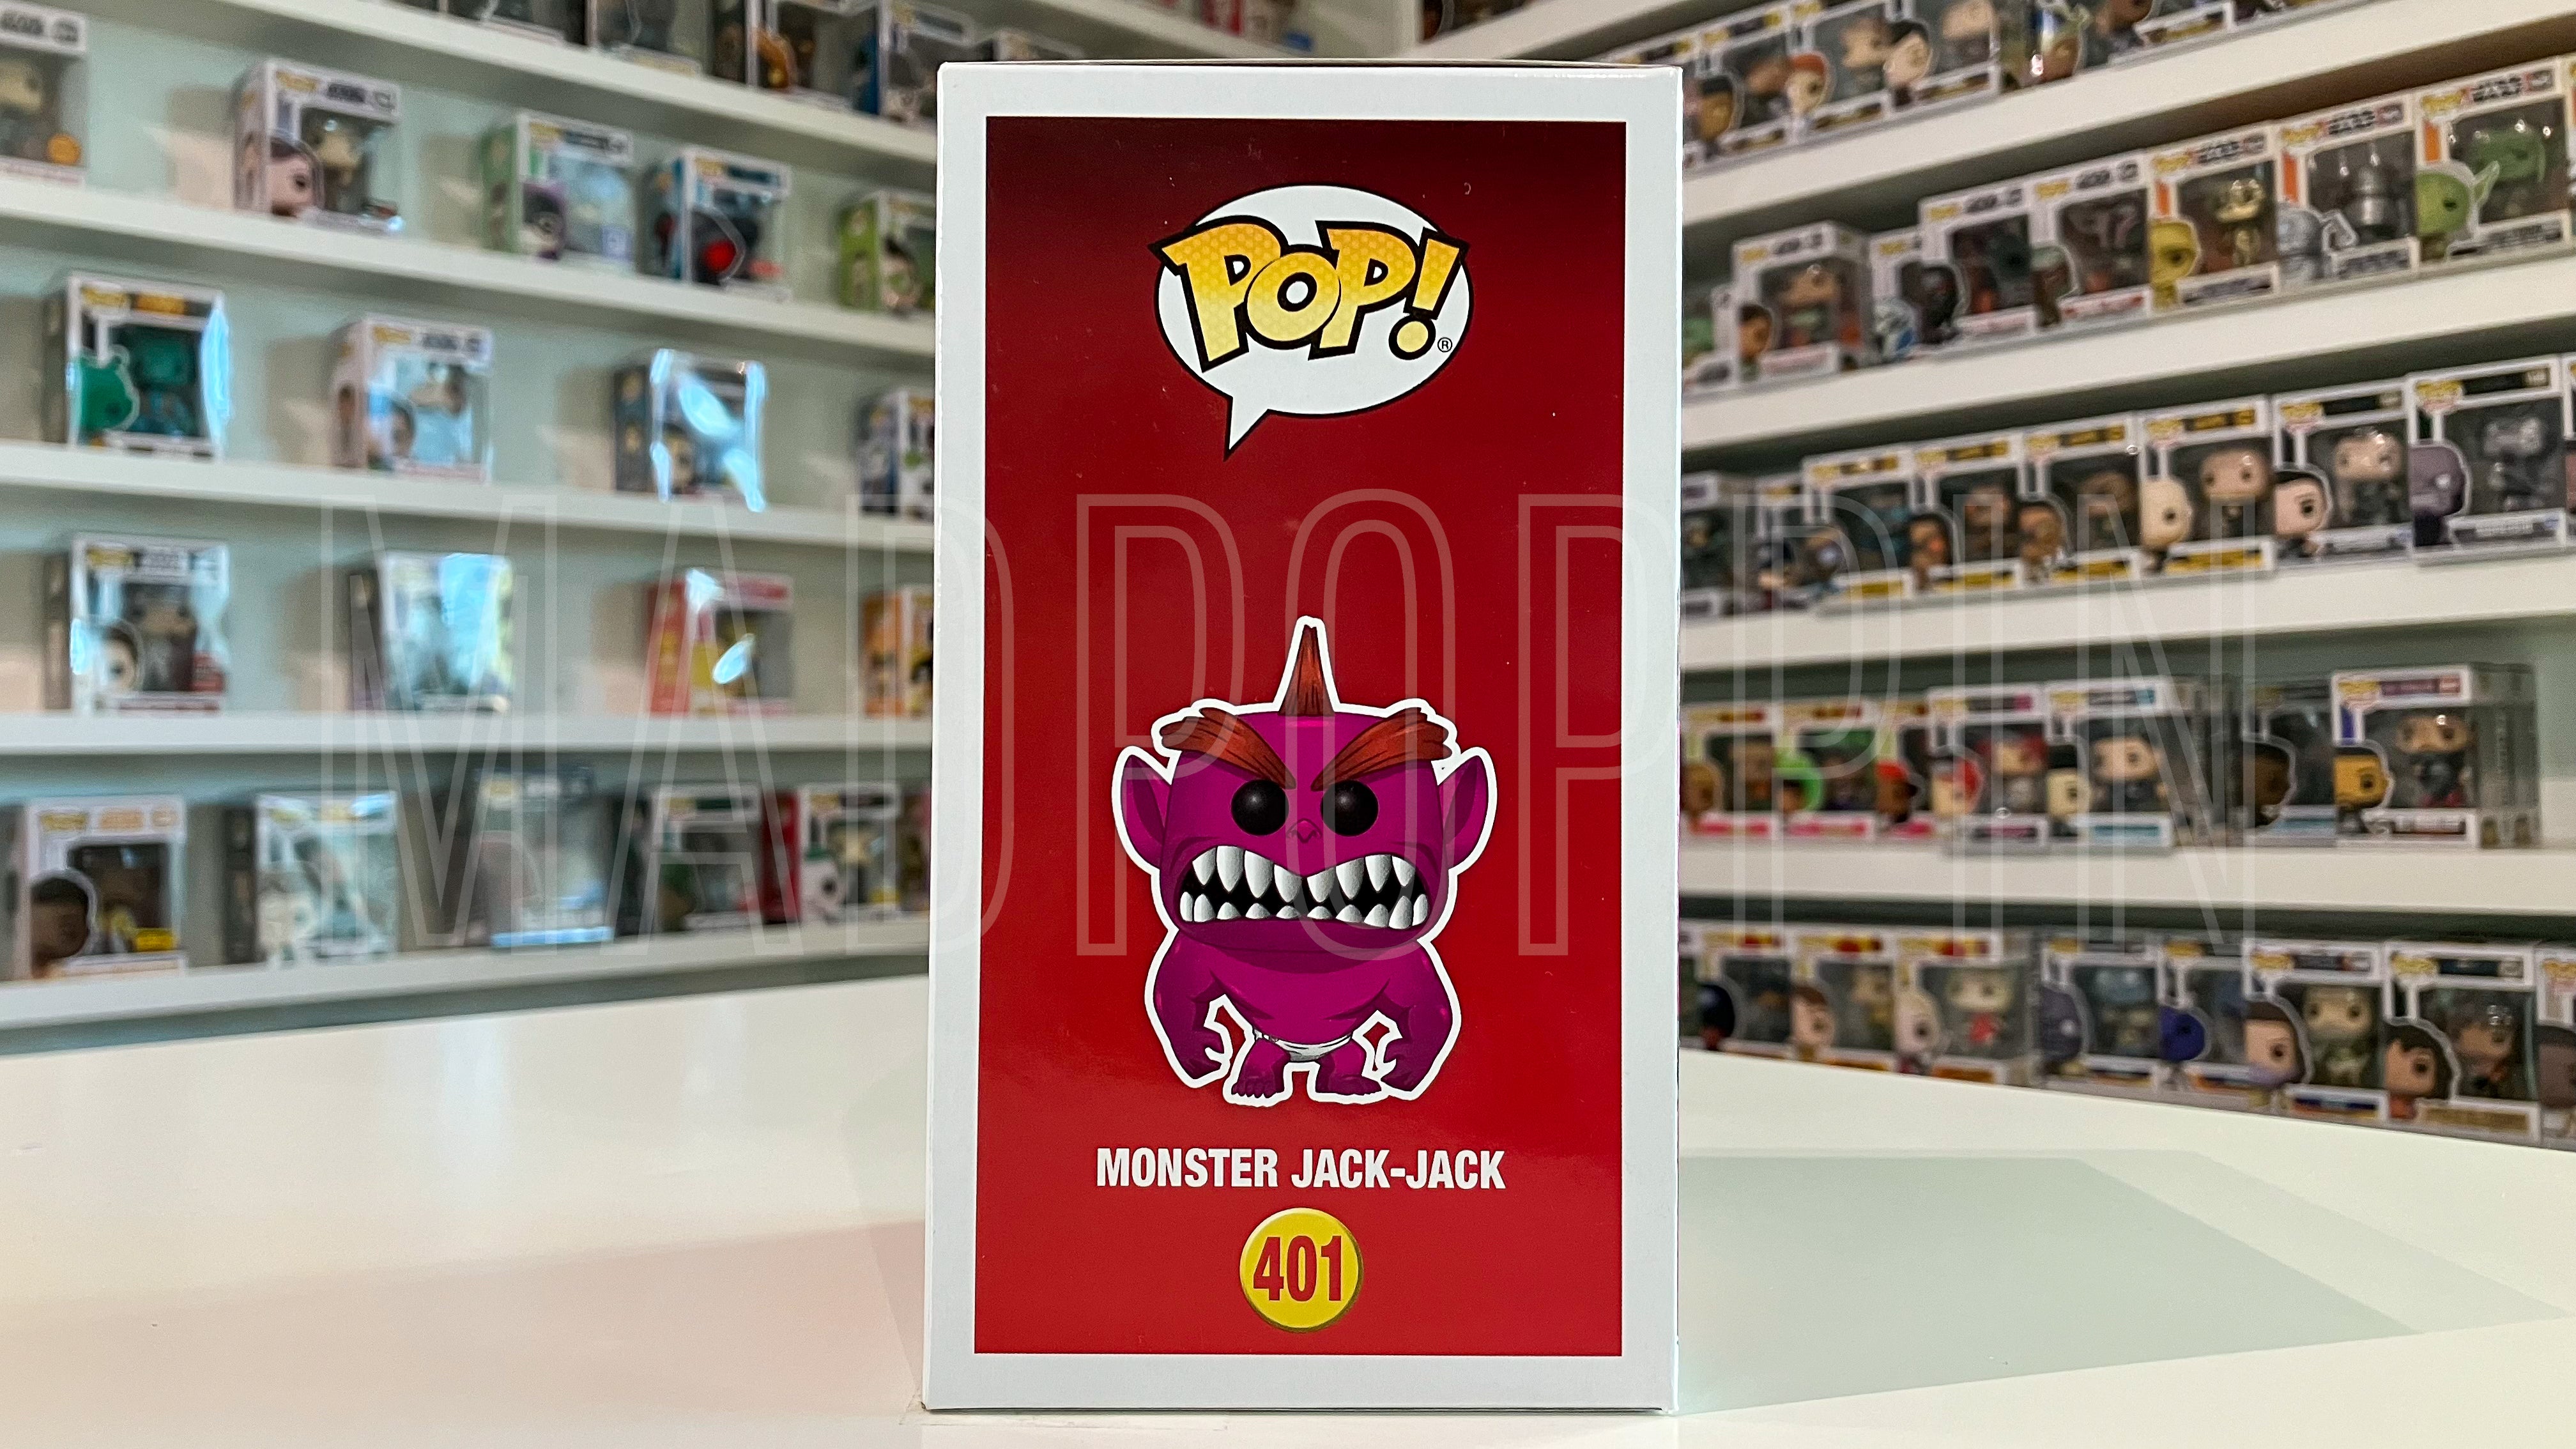 Funko Pop Disney/Pixar Incredibles 2 Monster Jack-Jack Funko-shop.com 401